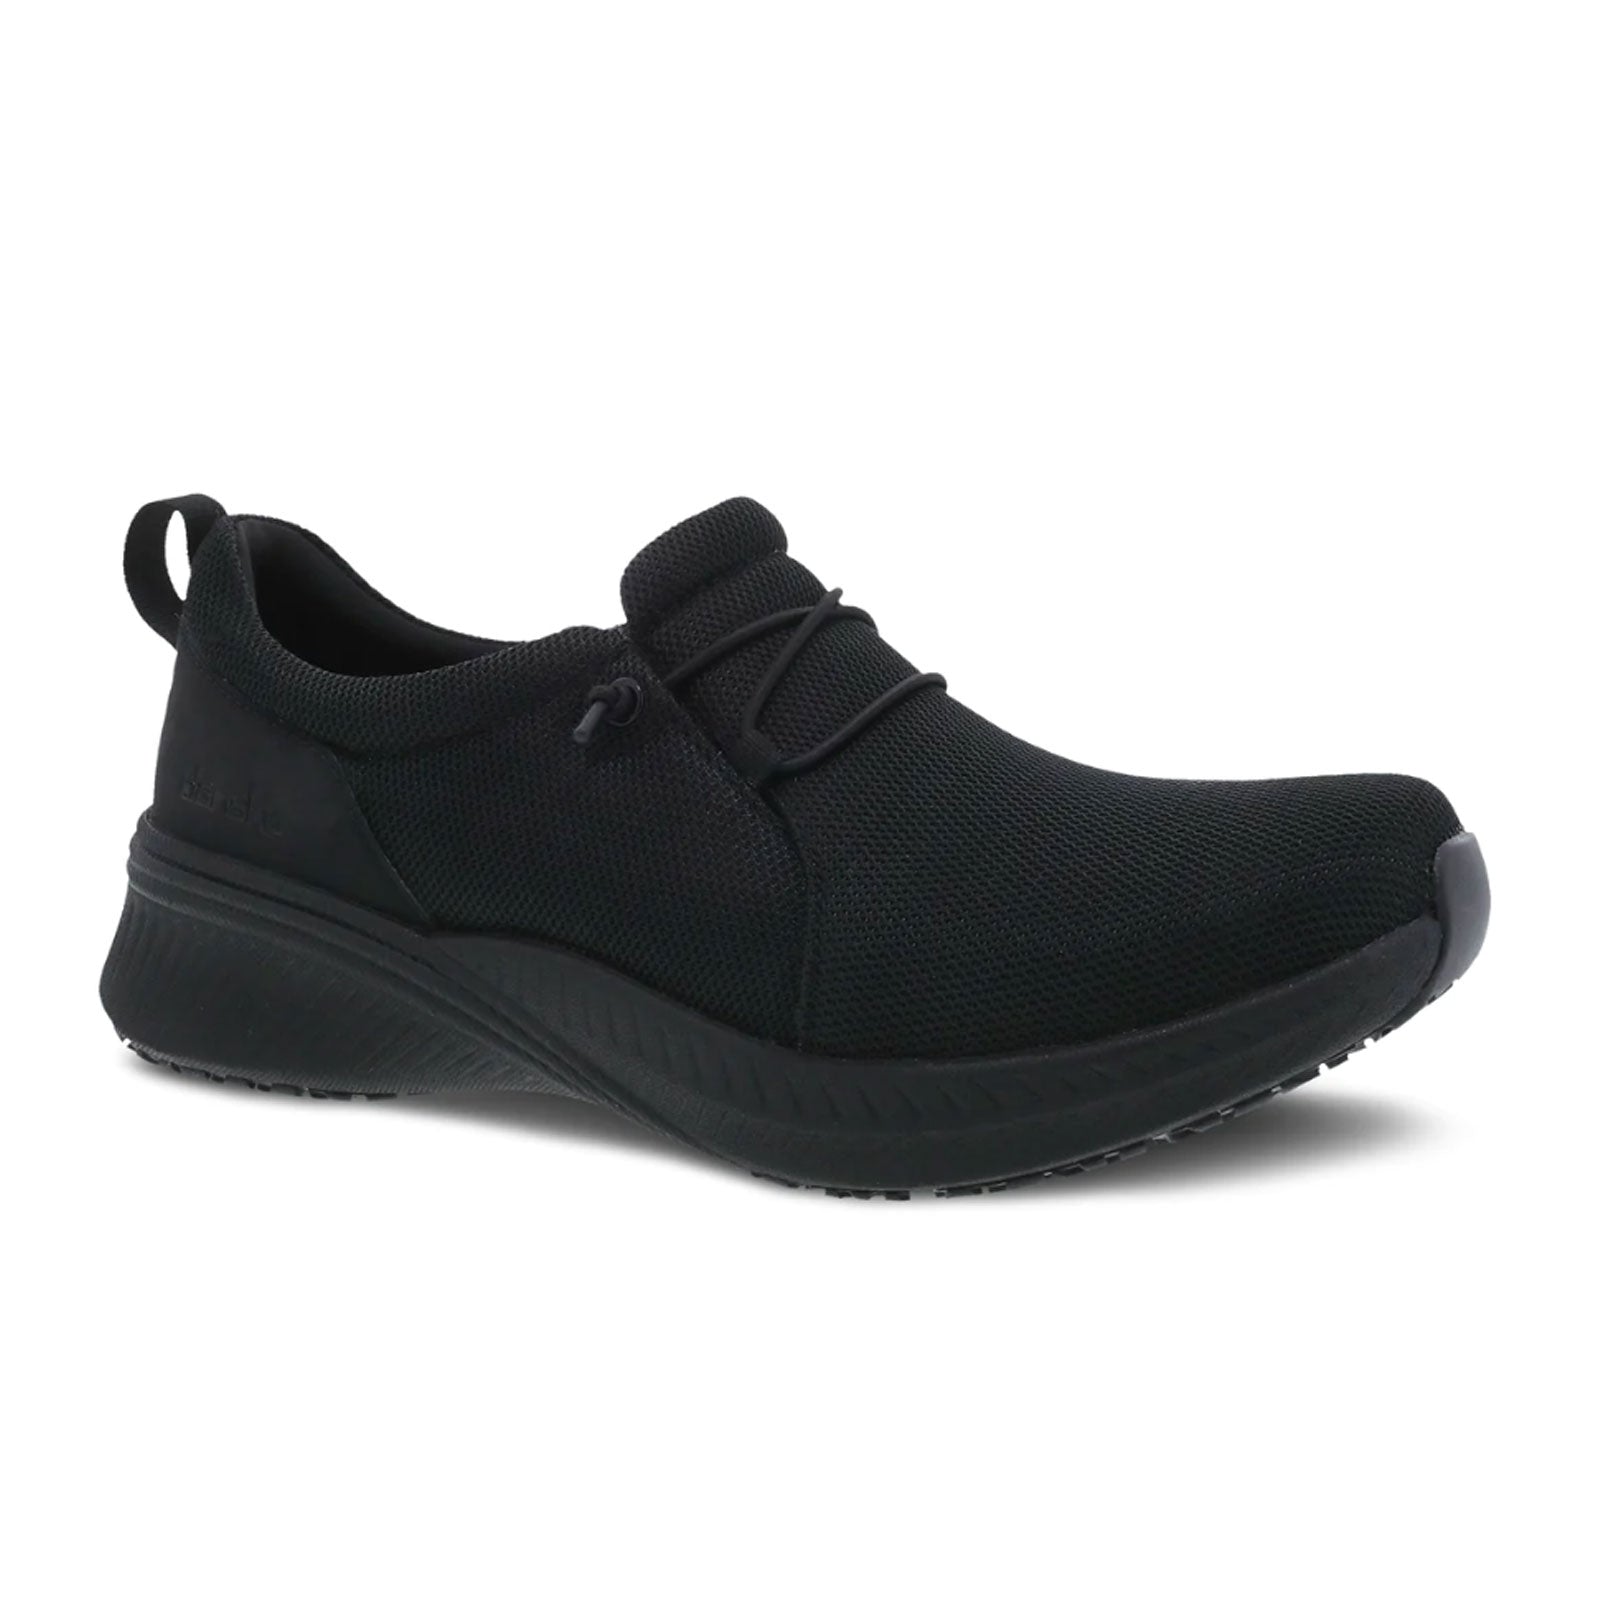 Dansko Marlee Slip On Sneaker (Women) - Black Mesh Dress-Casual - Sneakers - The Heel Shoe Fitters